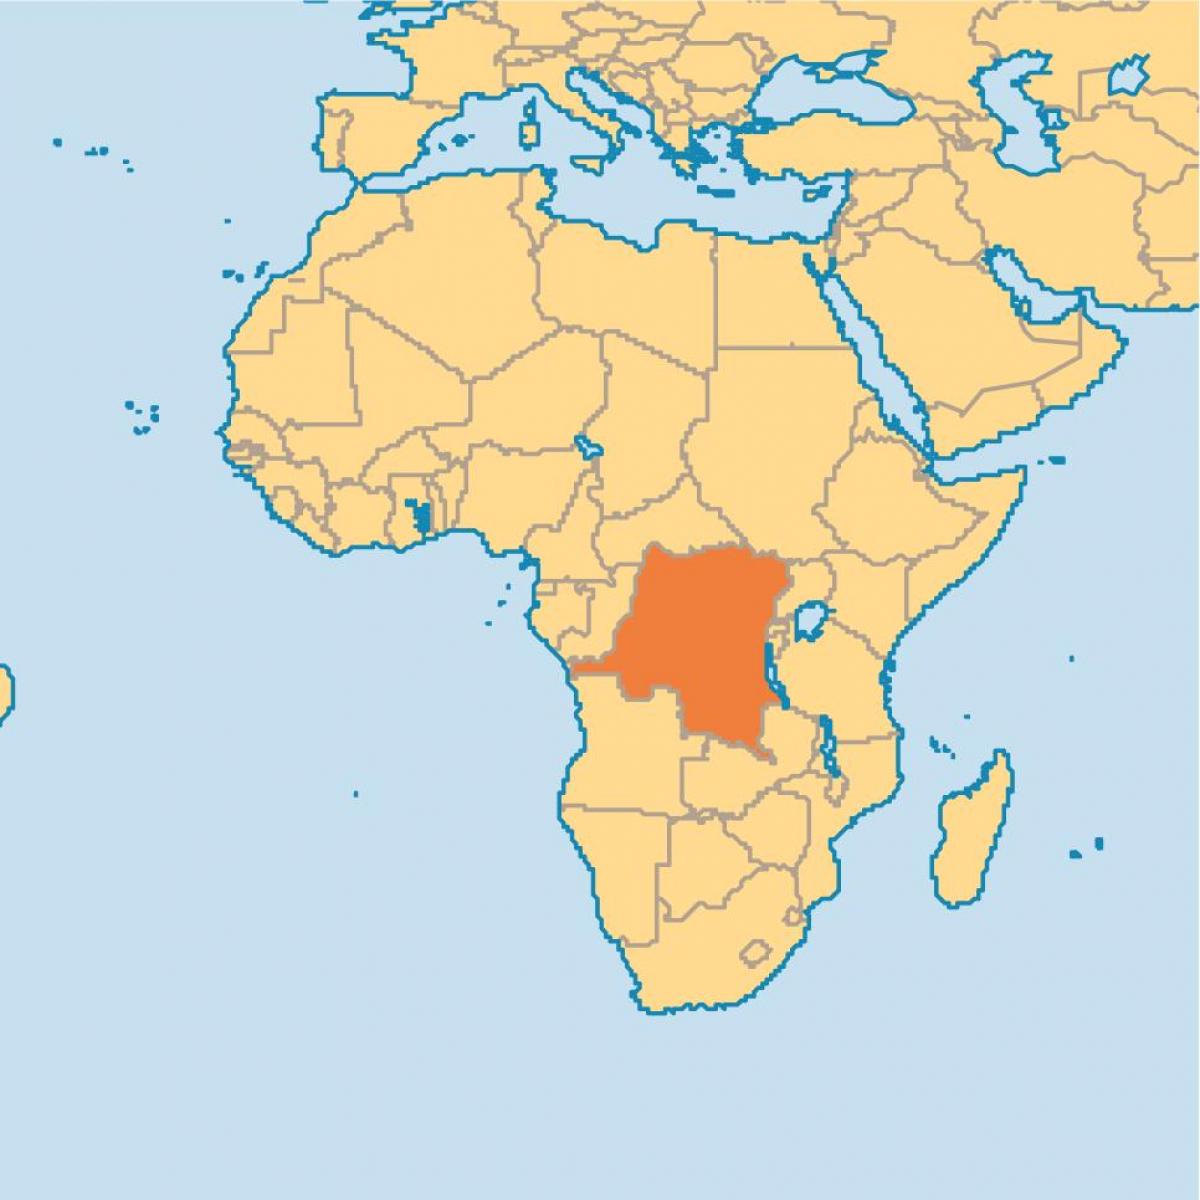 Peta dari zaire di dunia